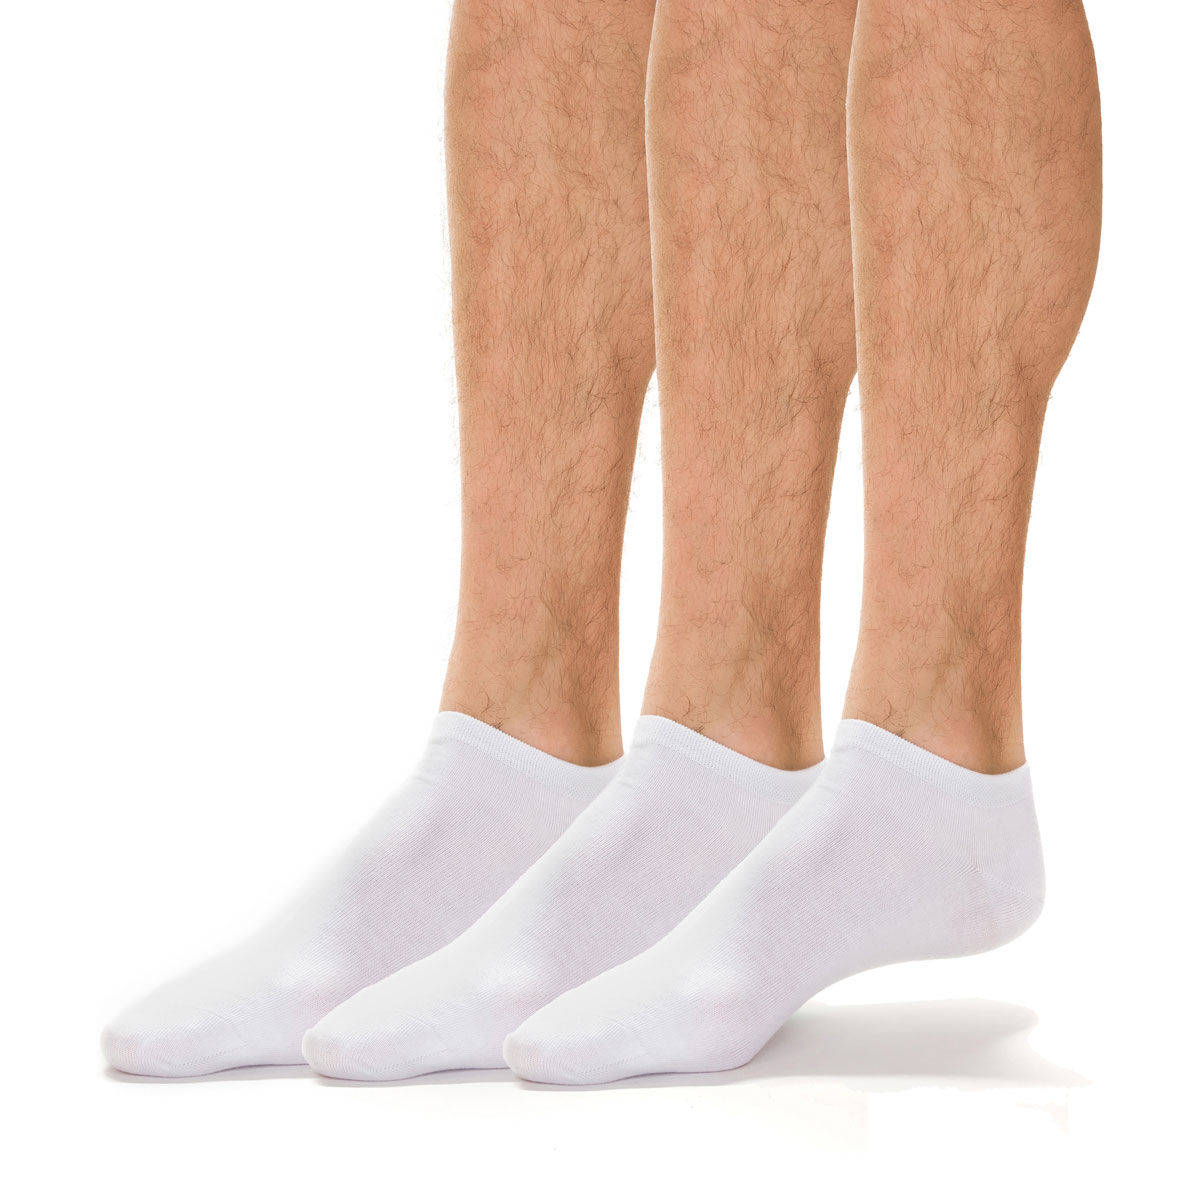 cotton trainer socks mens